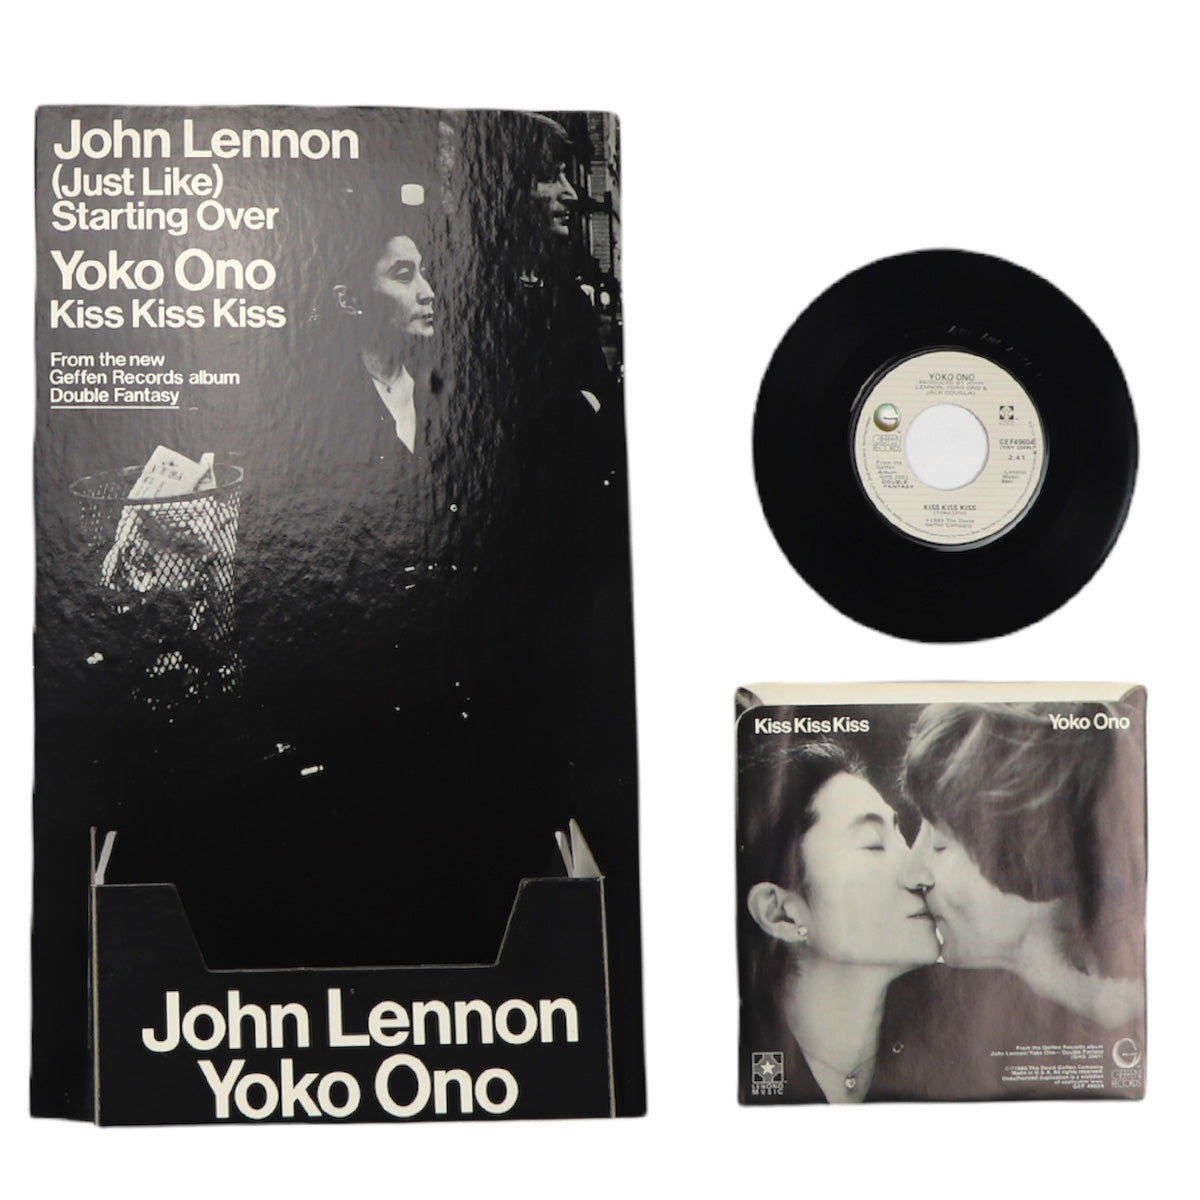 1980 John Lennon Double Fantasy Record Counter Display